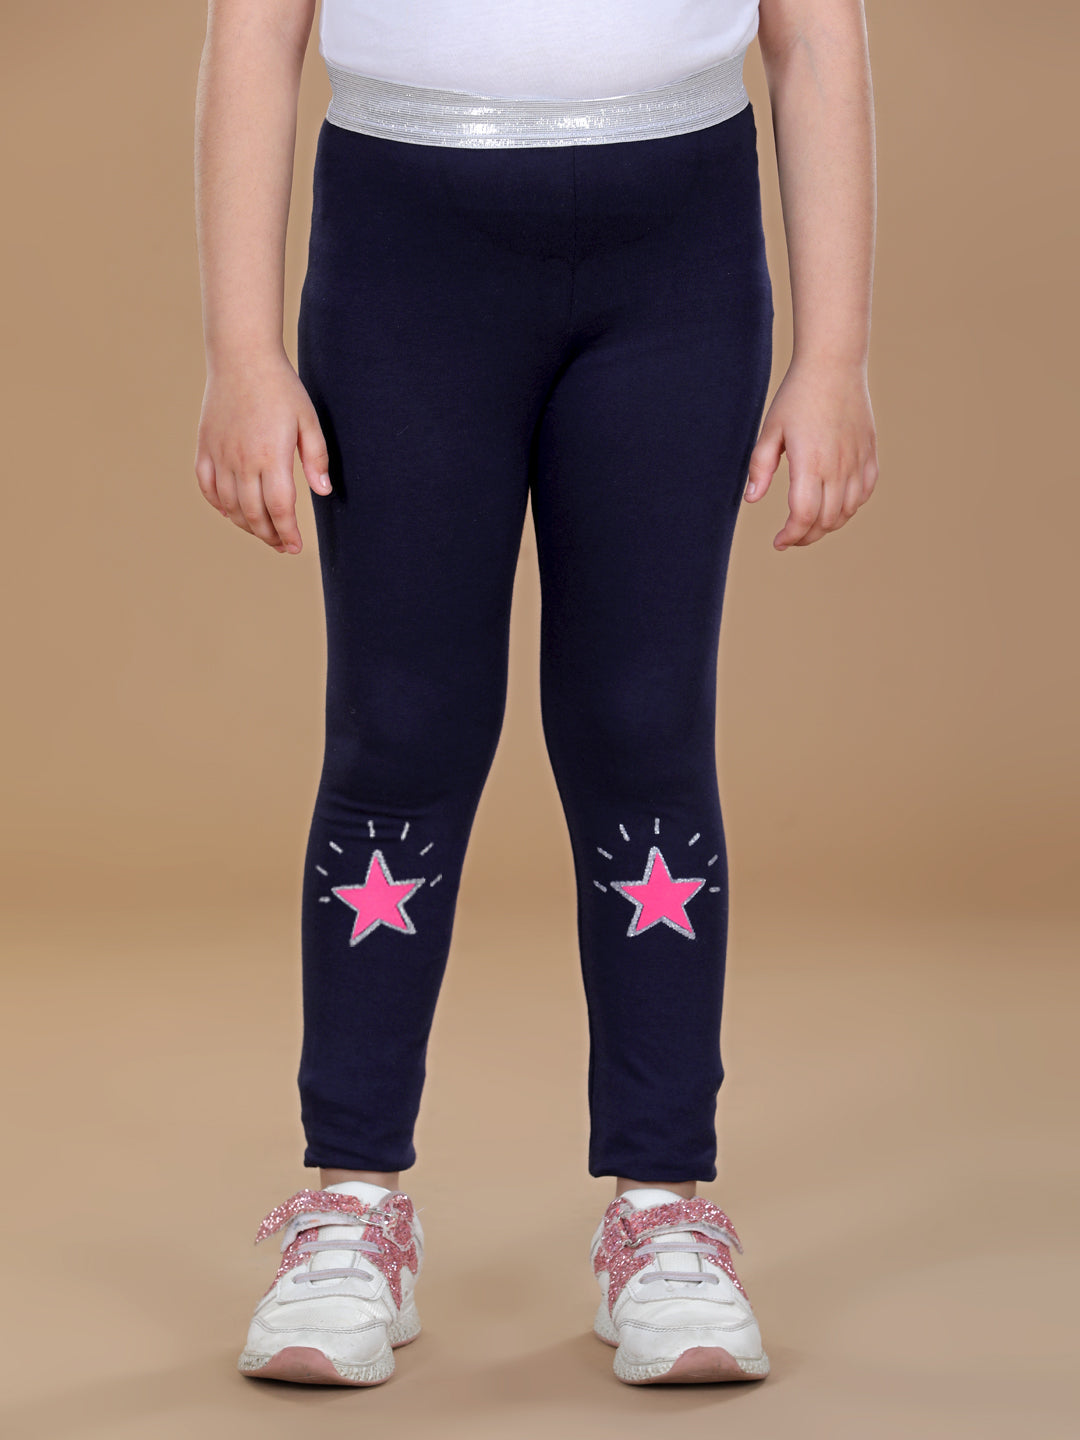 Girls Silver Elasticated Waistband & Star Printed Navy Leggings